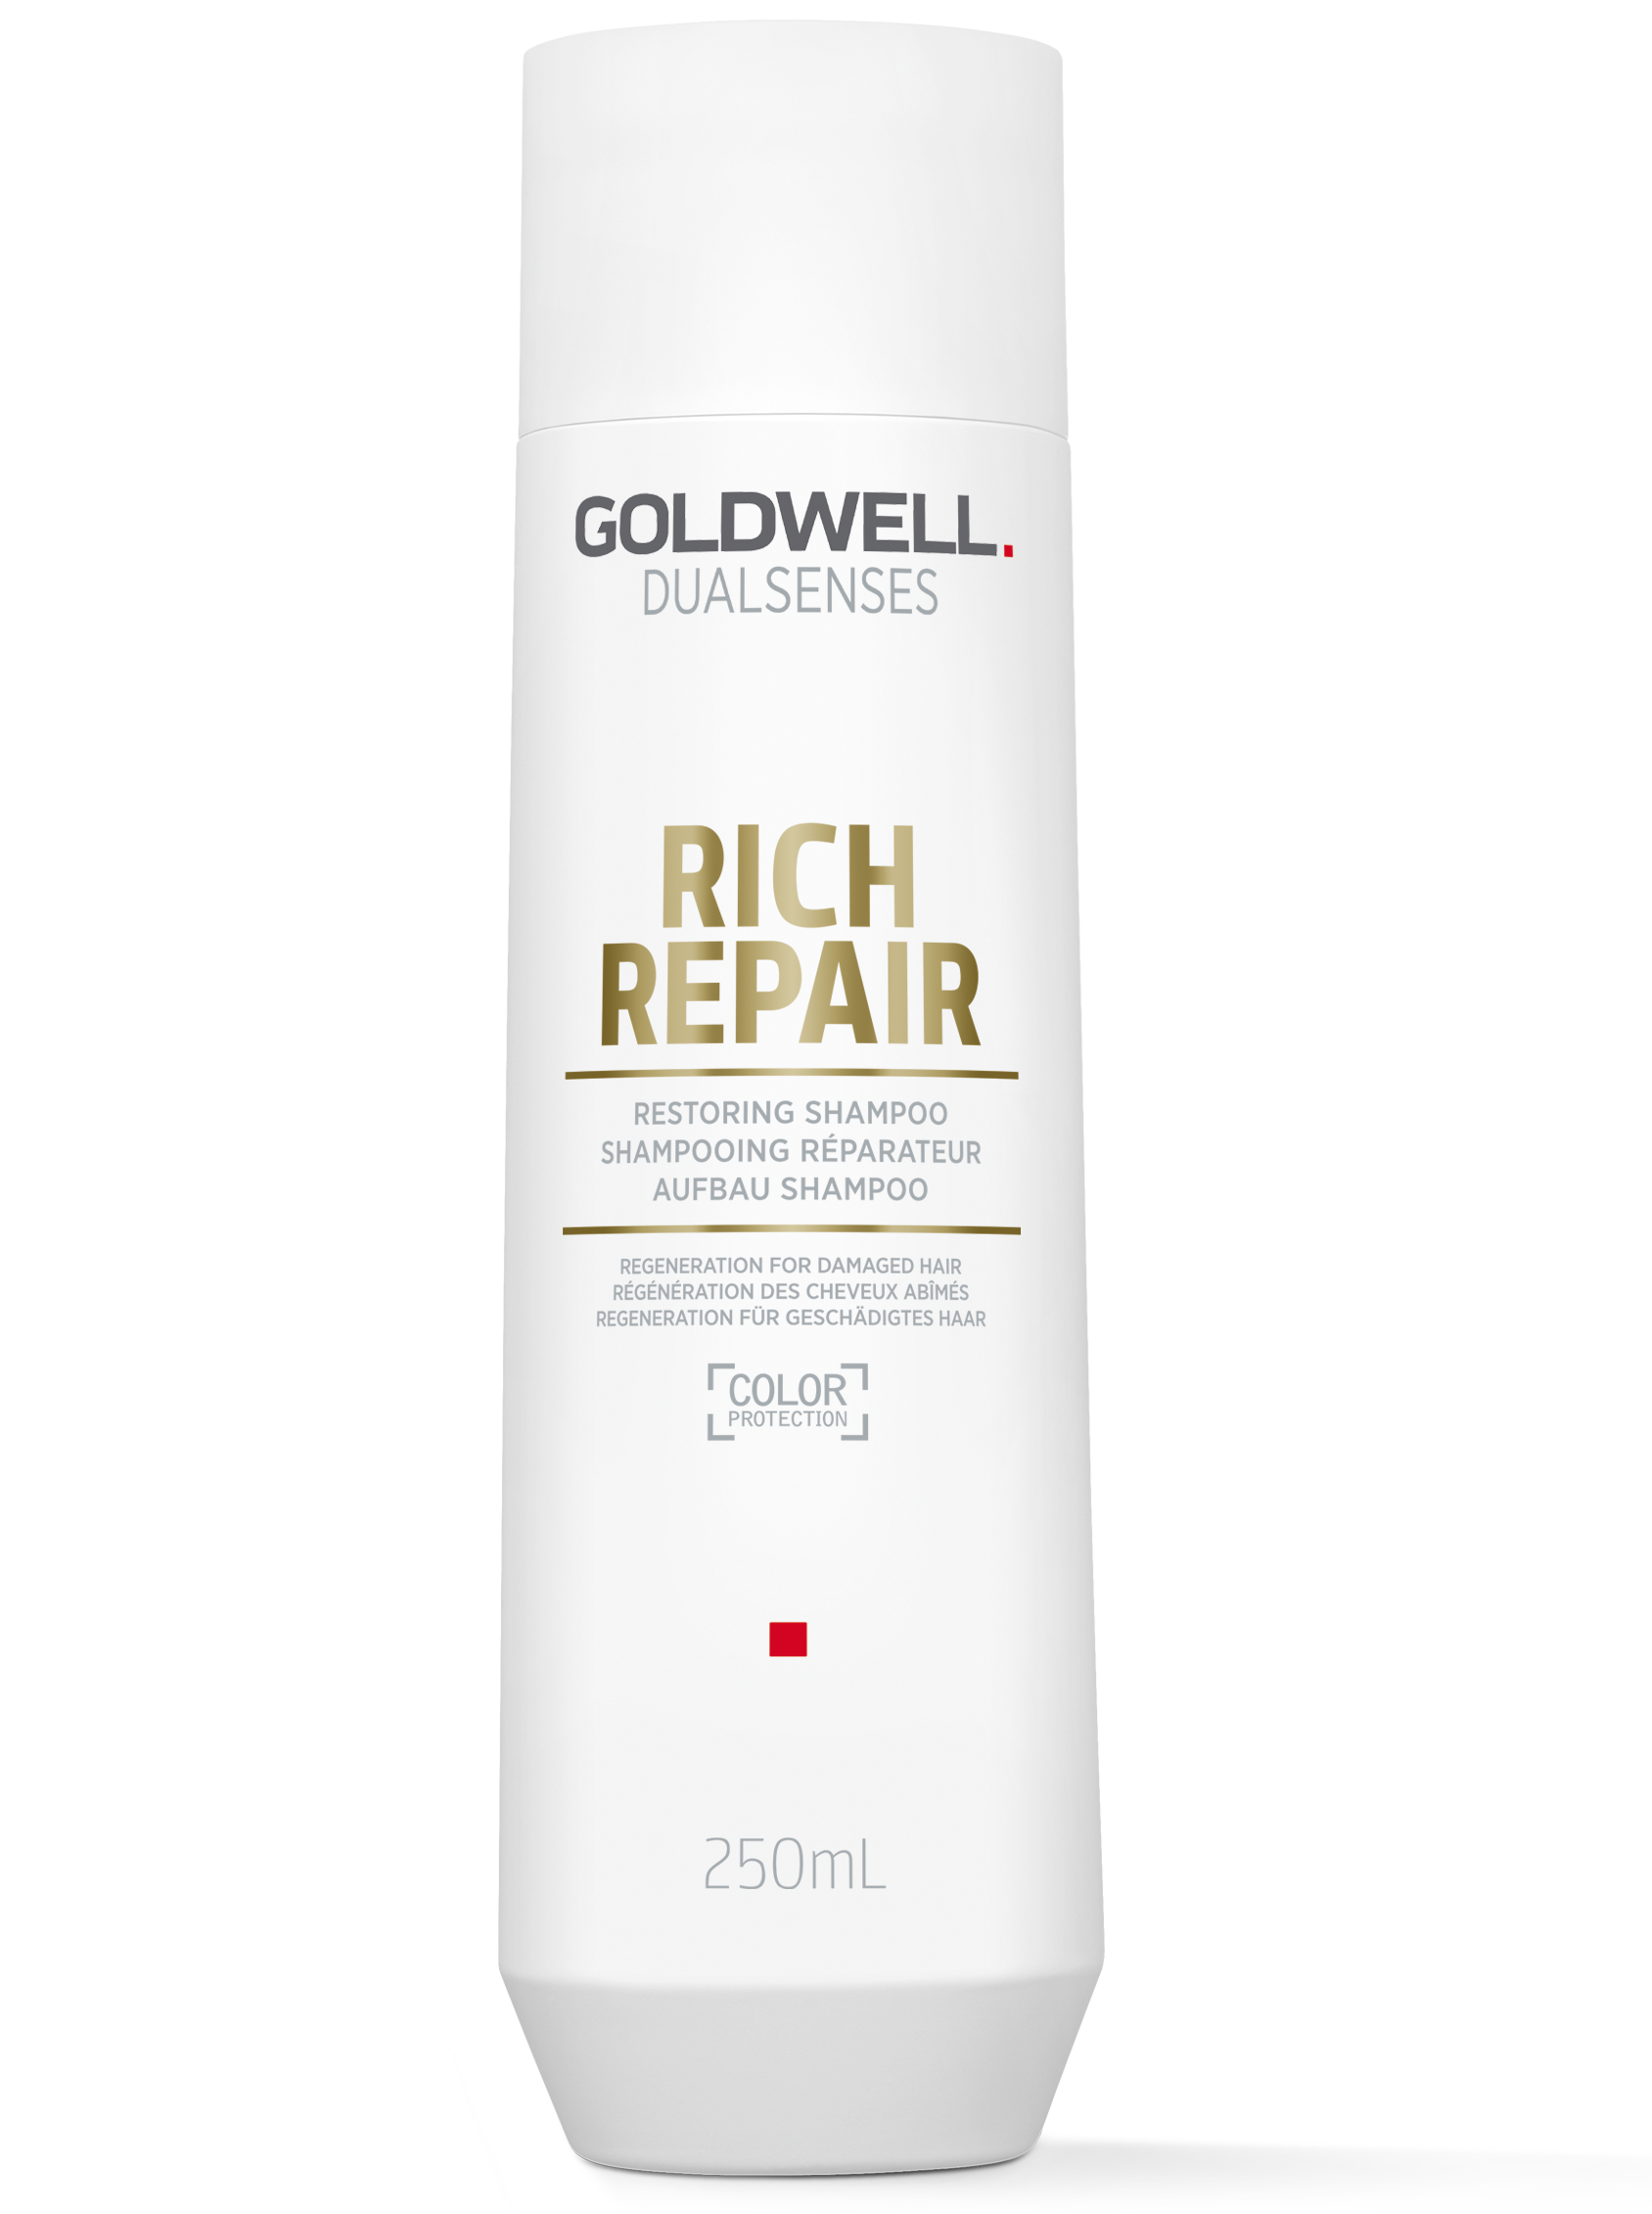 szampon goldwell rich repair opinie